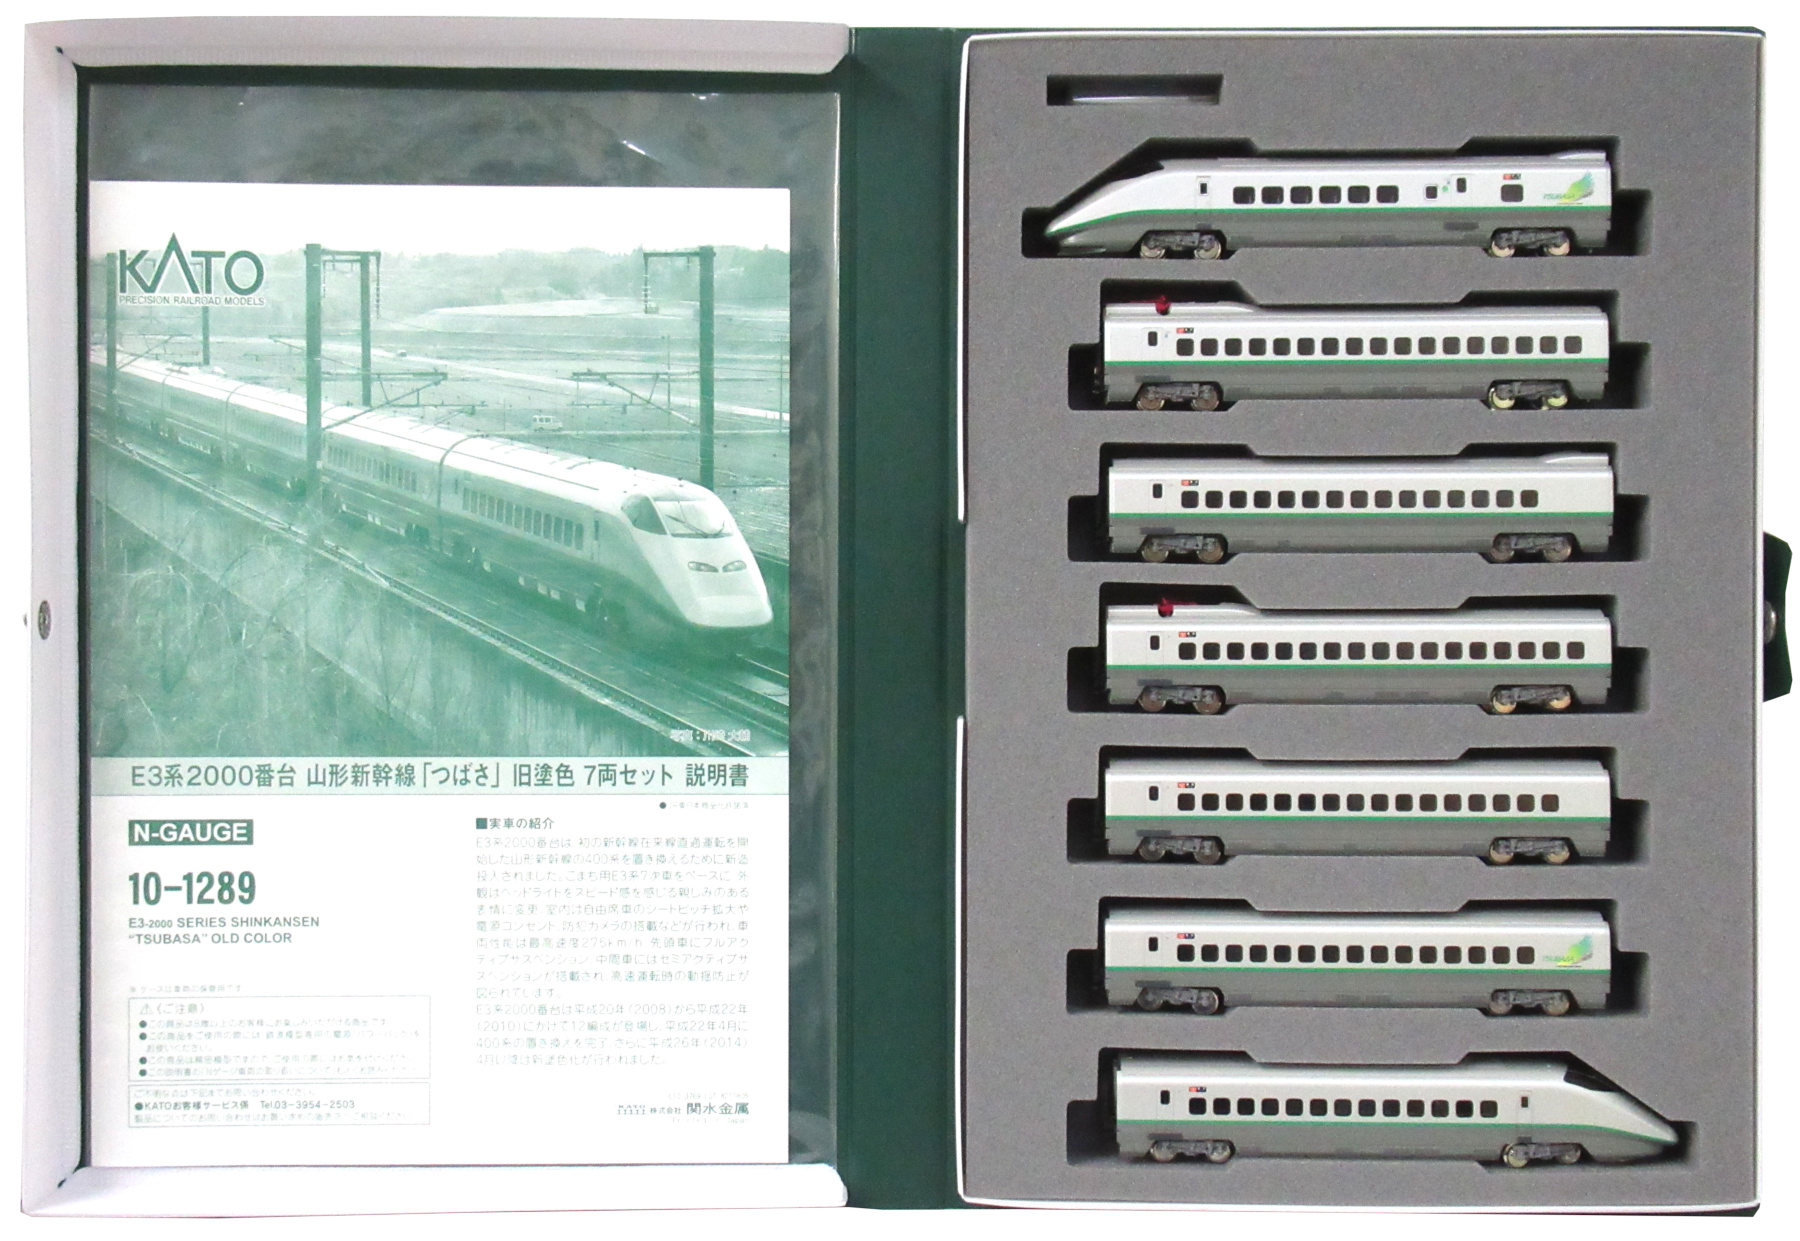 公式]鉄道模型(10-1289E3系2000番台 山形新幹線「つばさ」旧塗色 7両